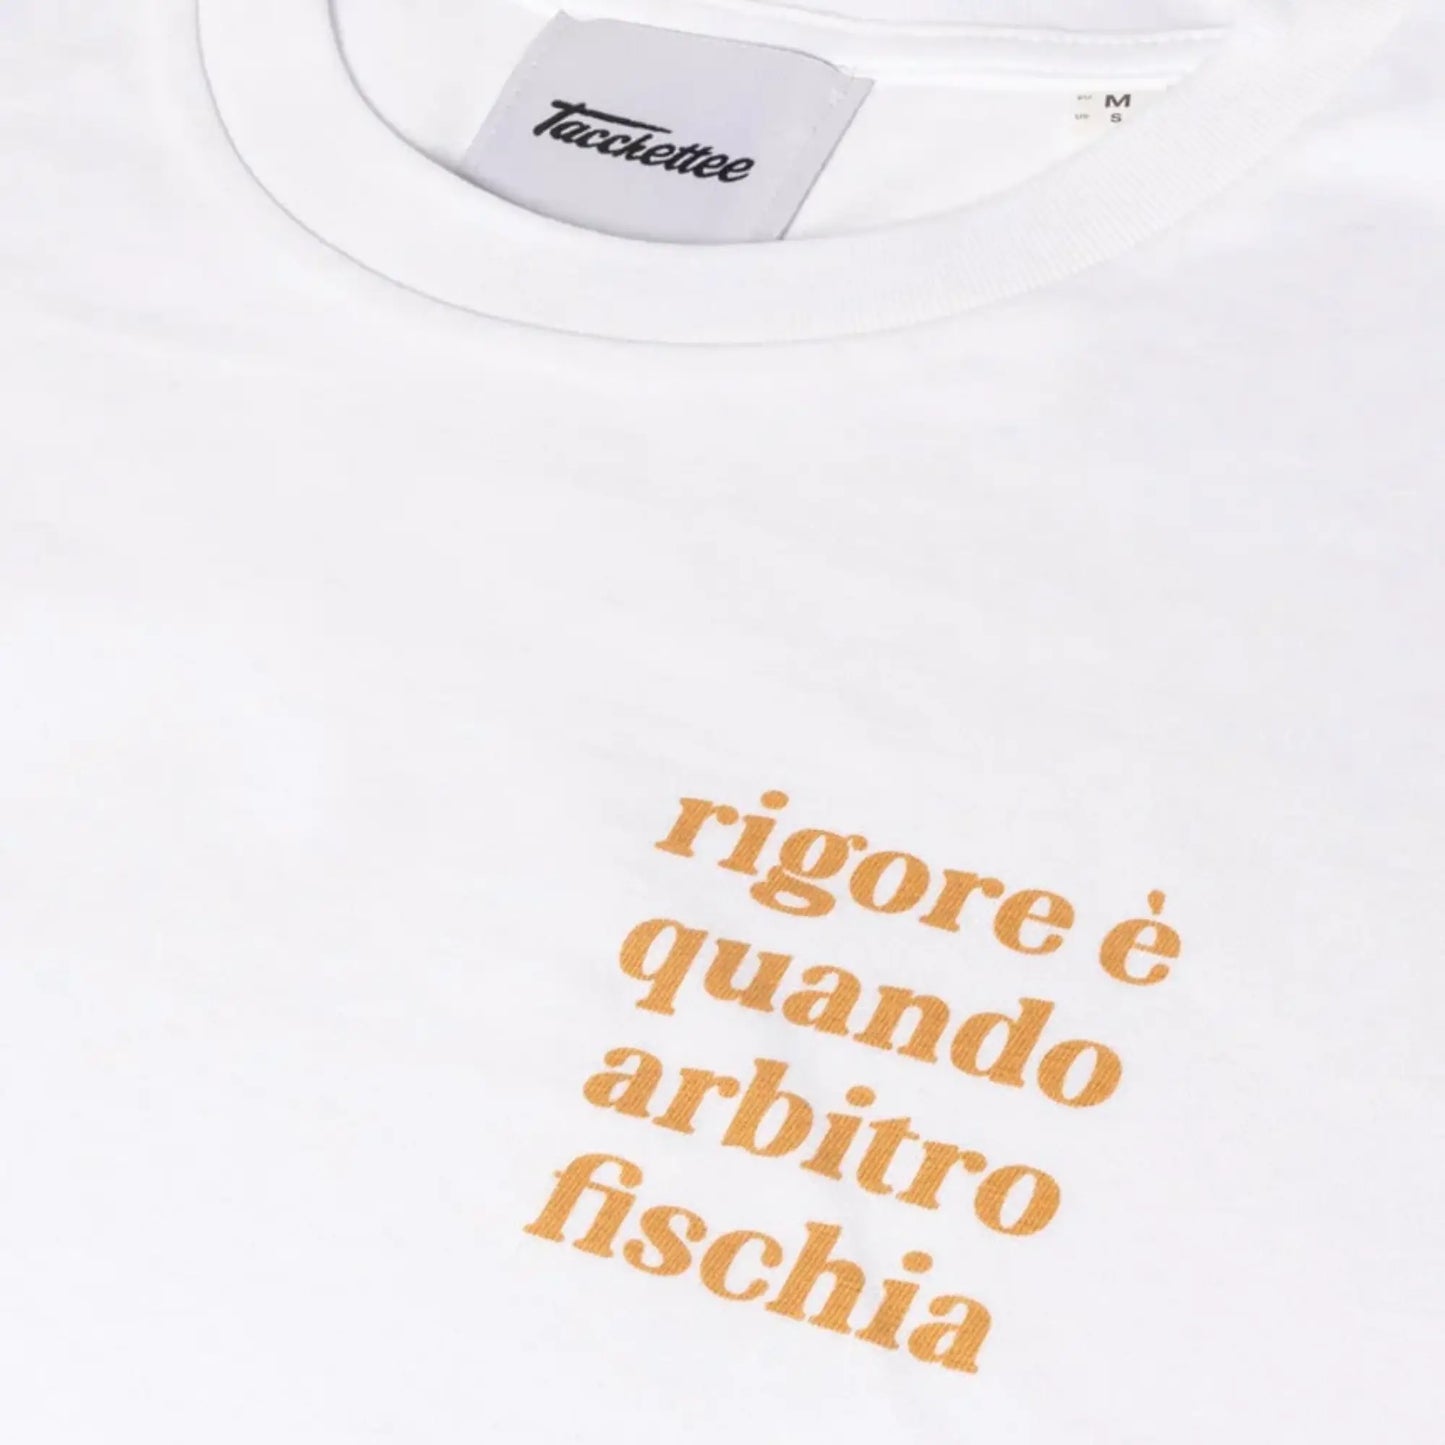 RIGORE E Tシャツ - UNISEX - ホワイト